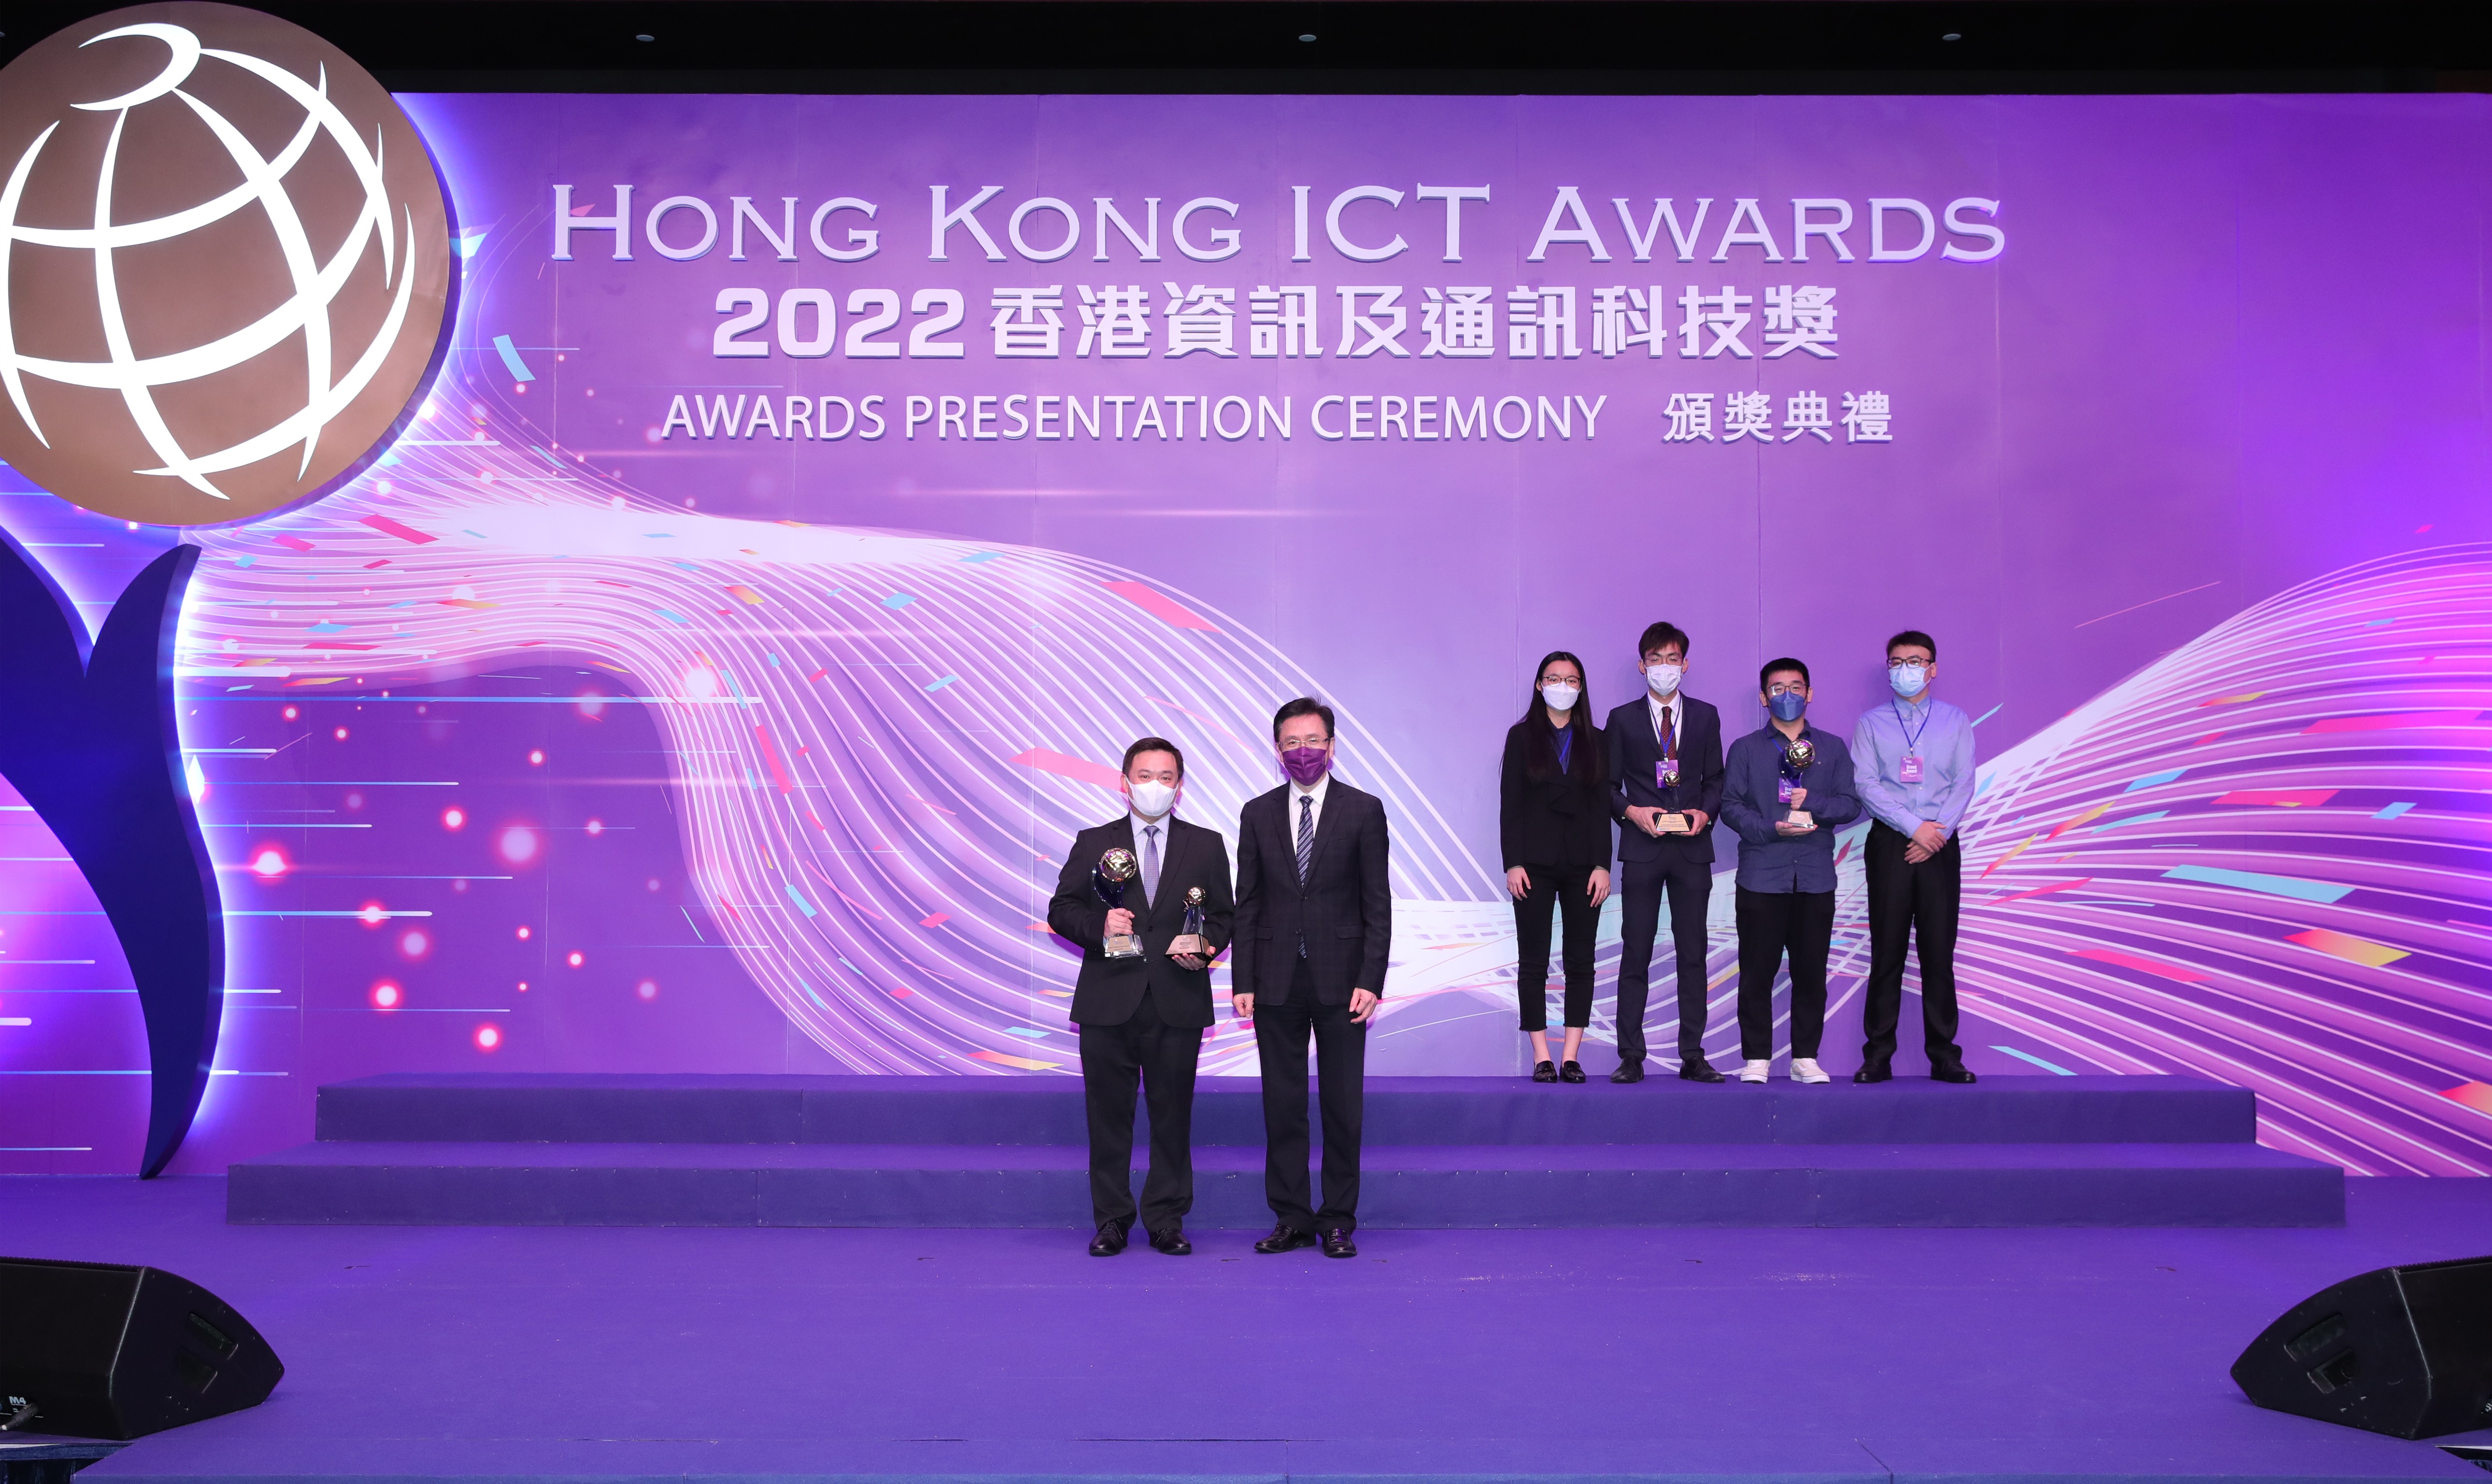 Hong Kong ICT Awards 2022 Digital Entertainment Grand Award Winner